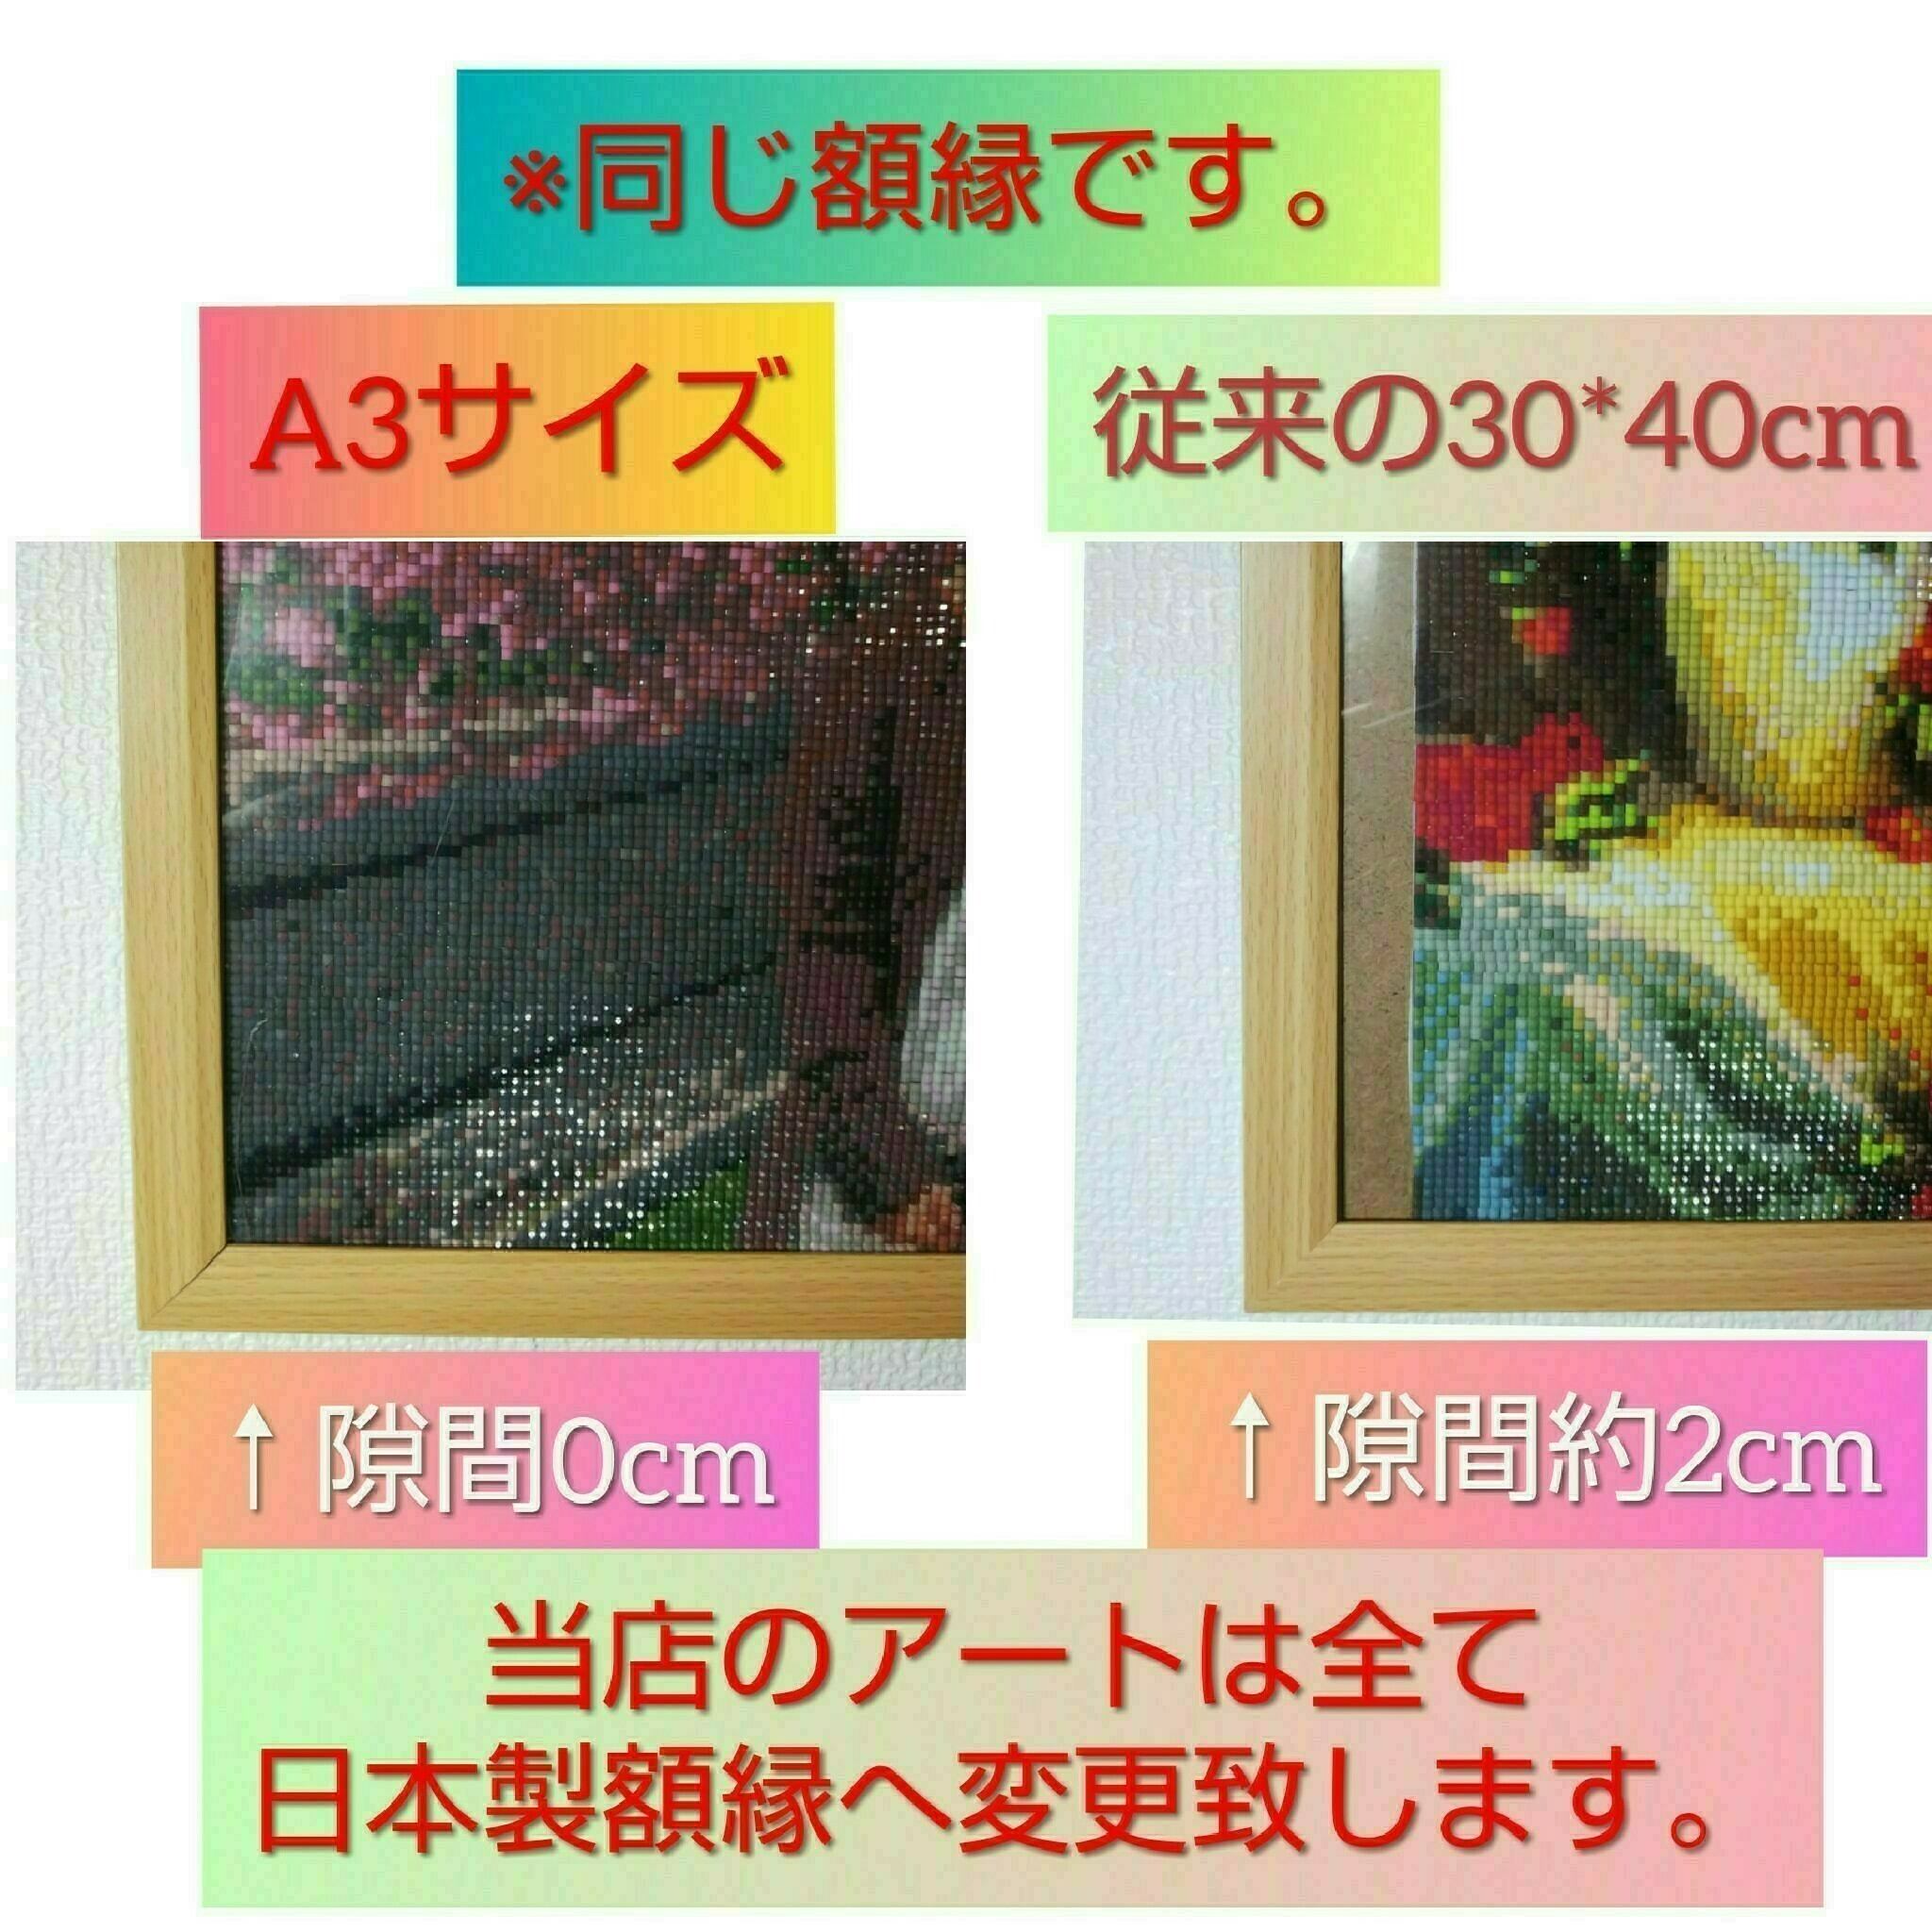 A3サイズ 四角ビーズ【fan-004】フルダイヤモンドアート